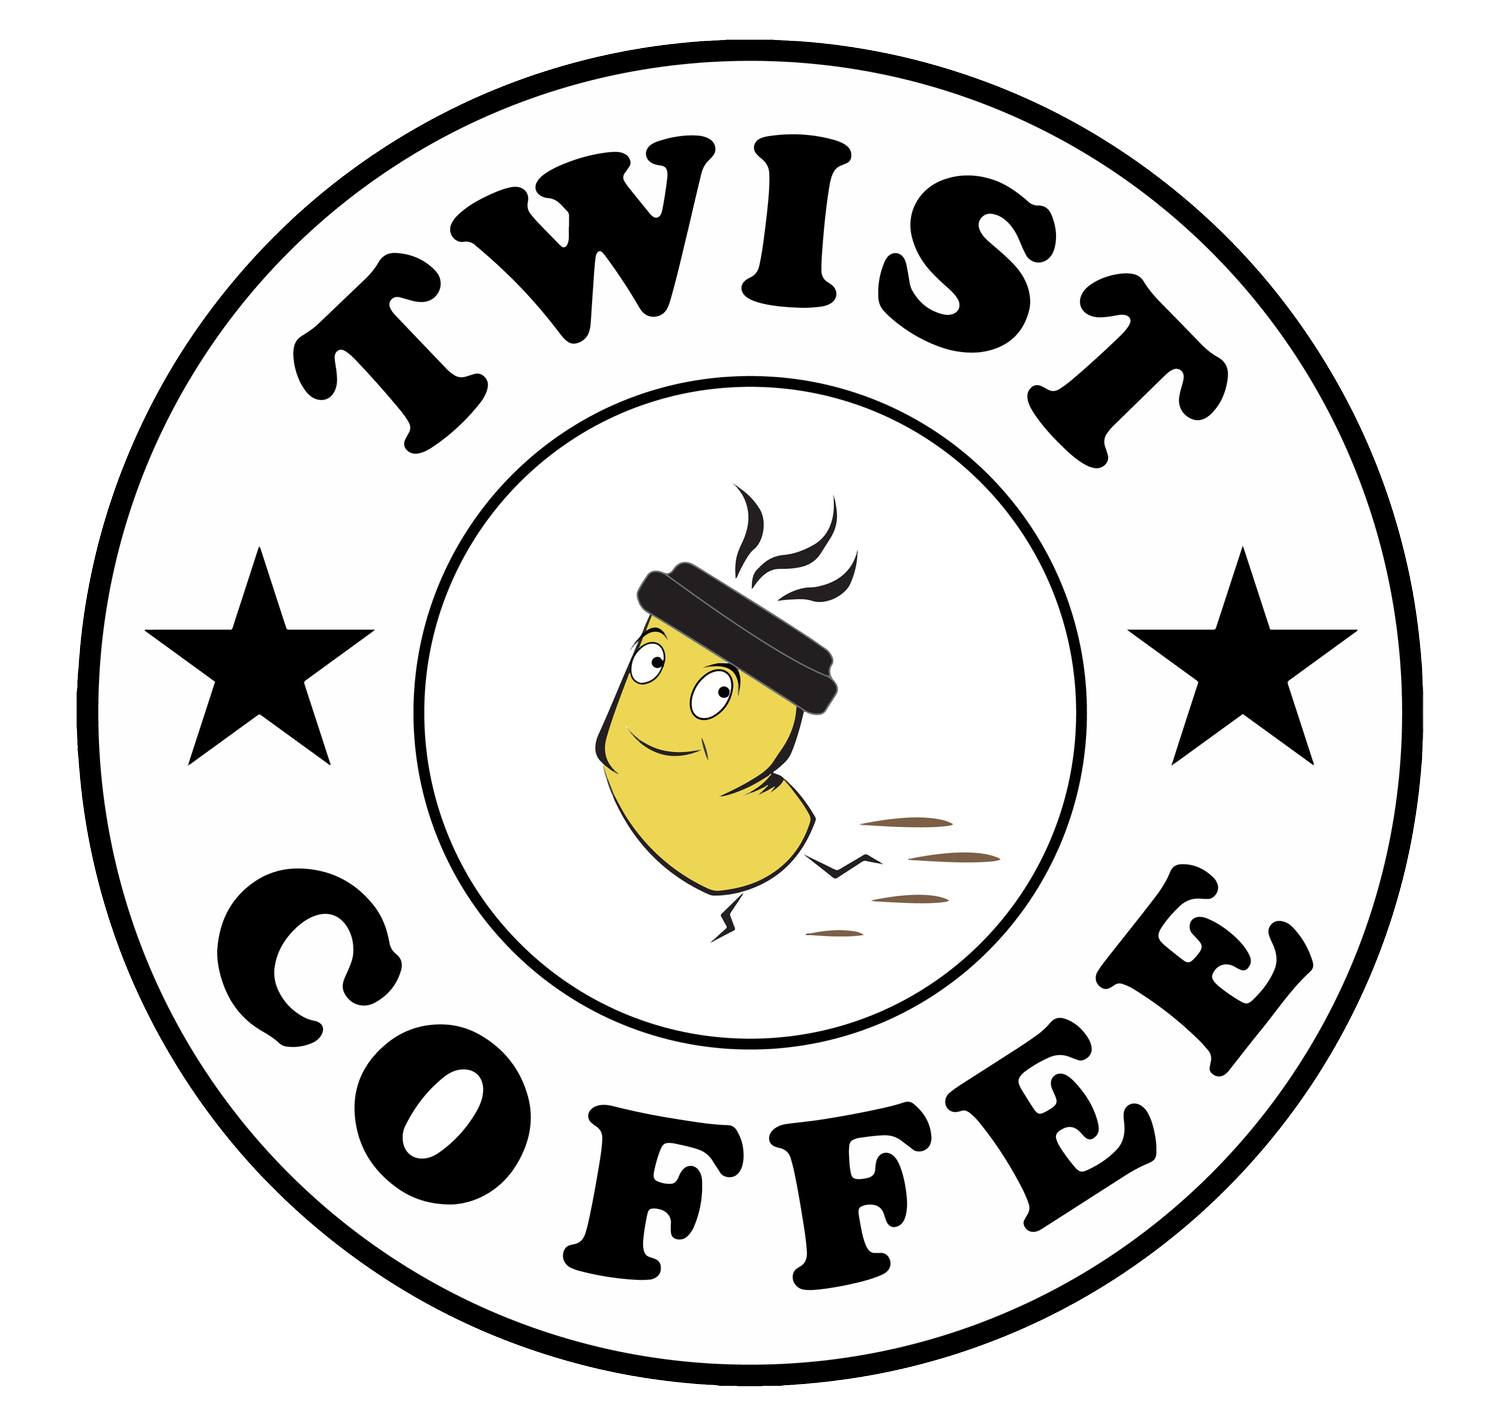 TWIST COFFEE 